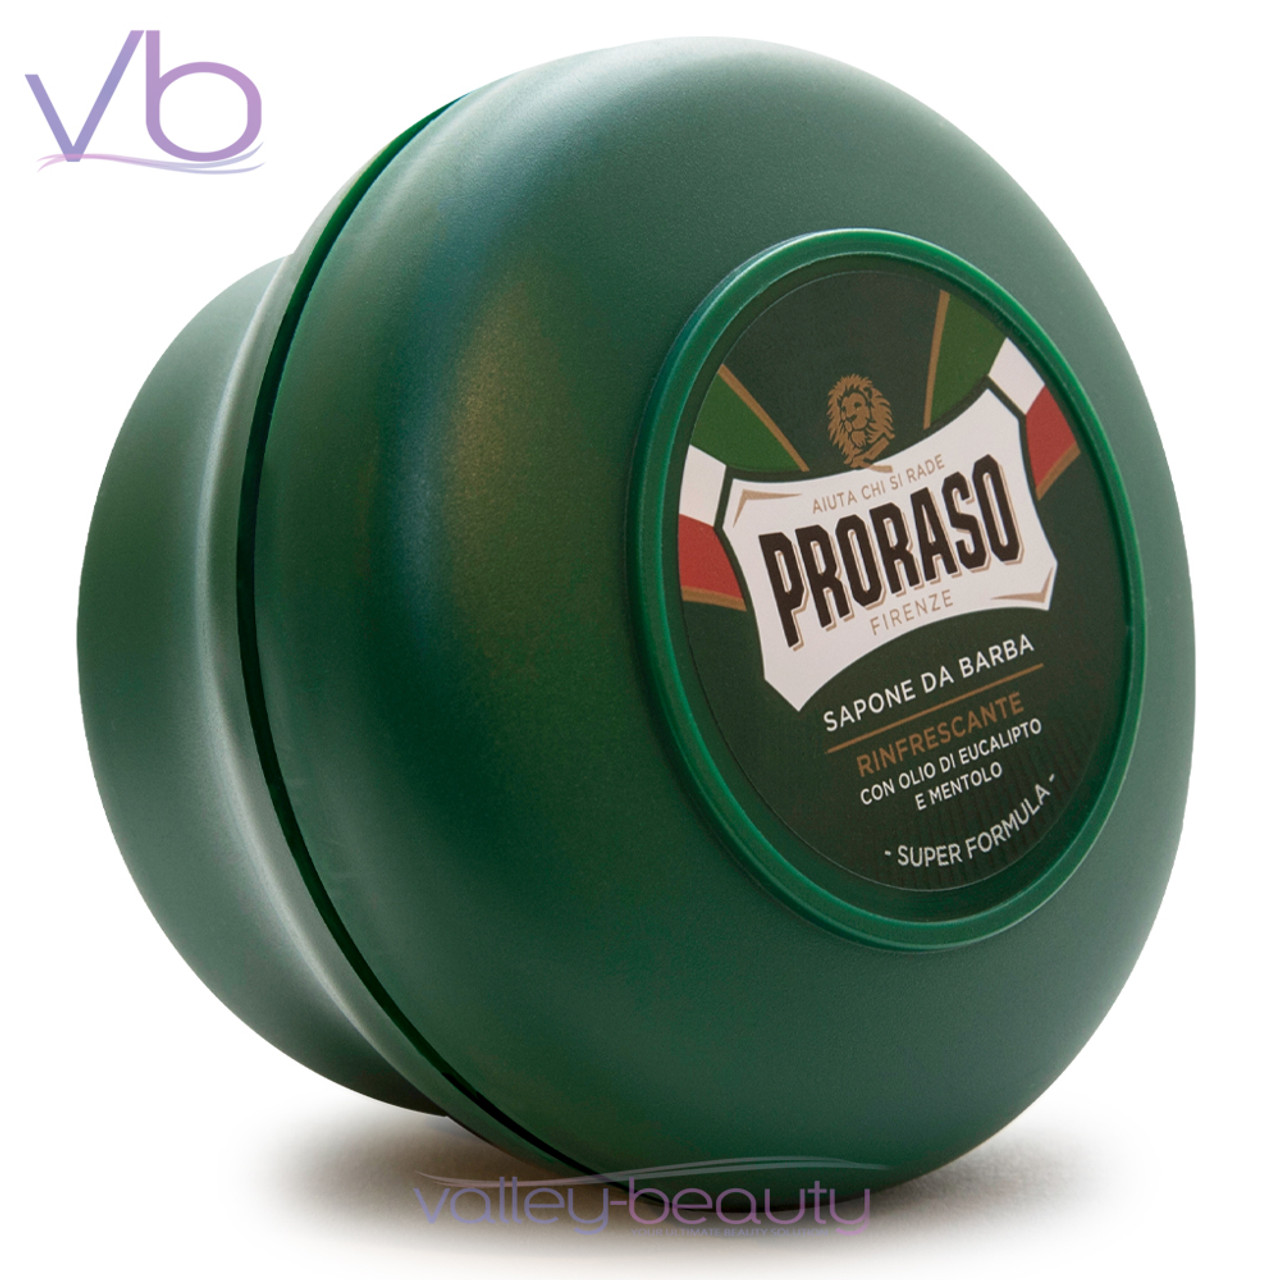 Proraso Green Shaving Soap - Refreshing